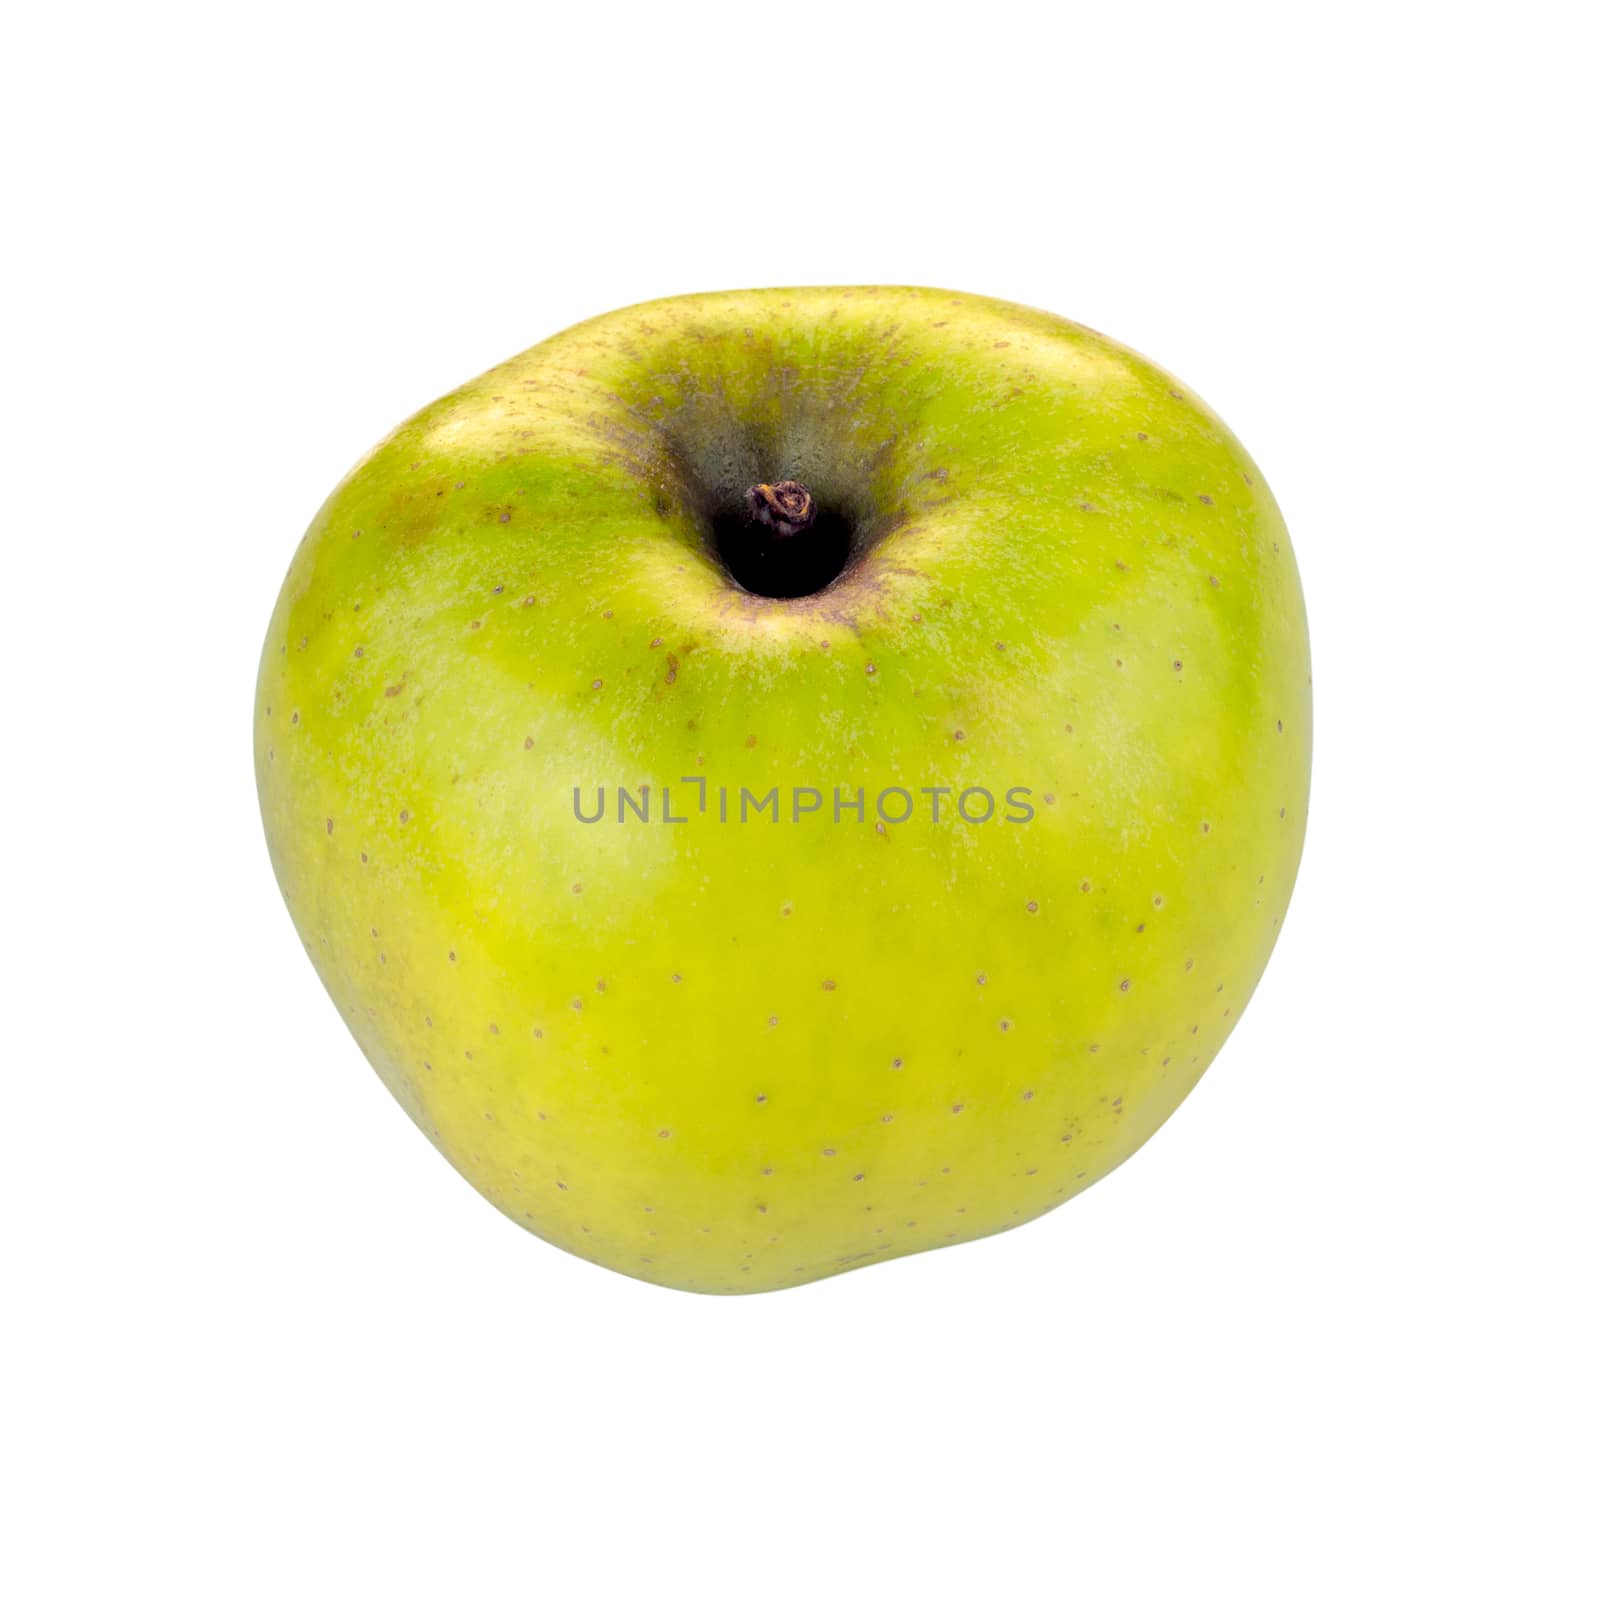 Yellow Renetta Apple on white background by matteocurcio